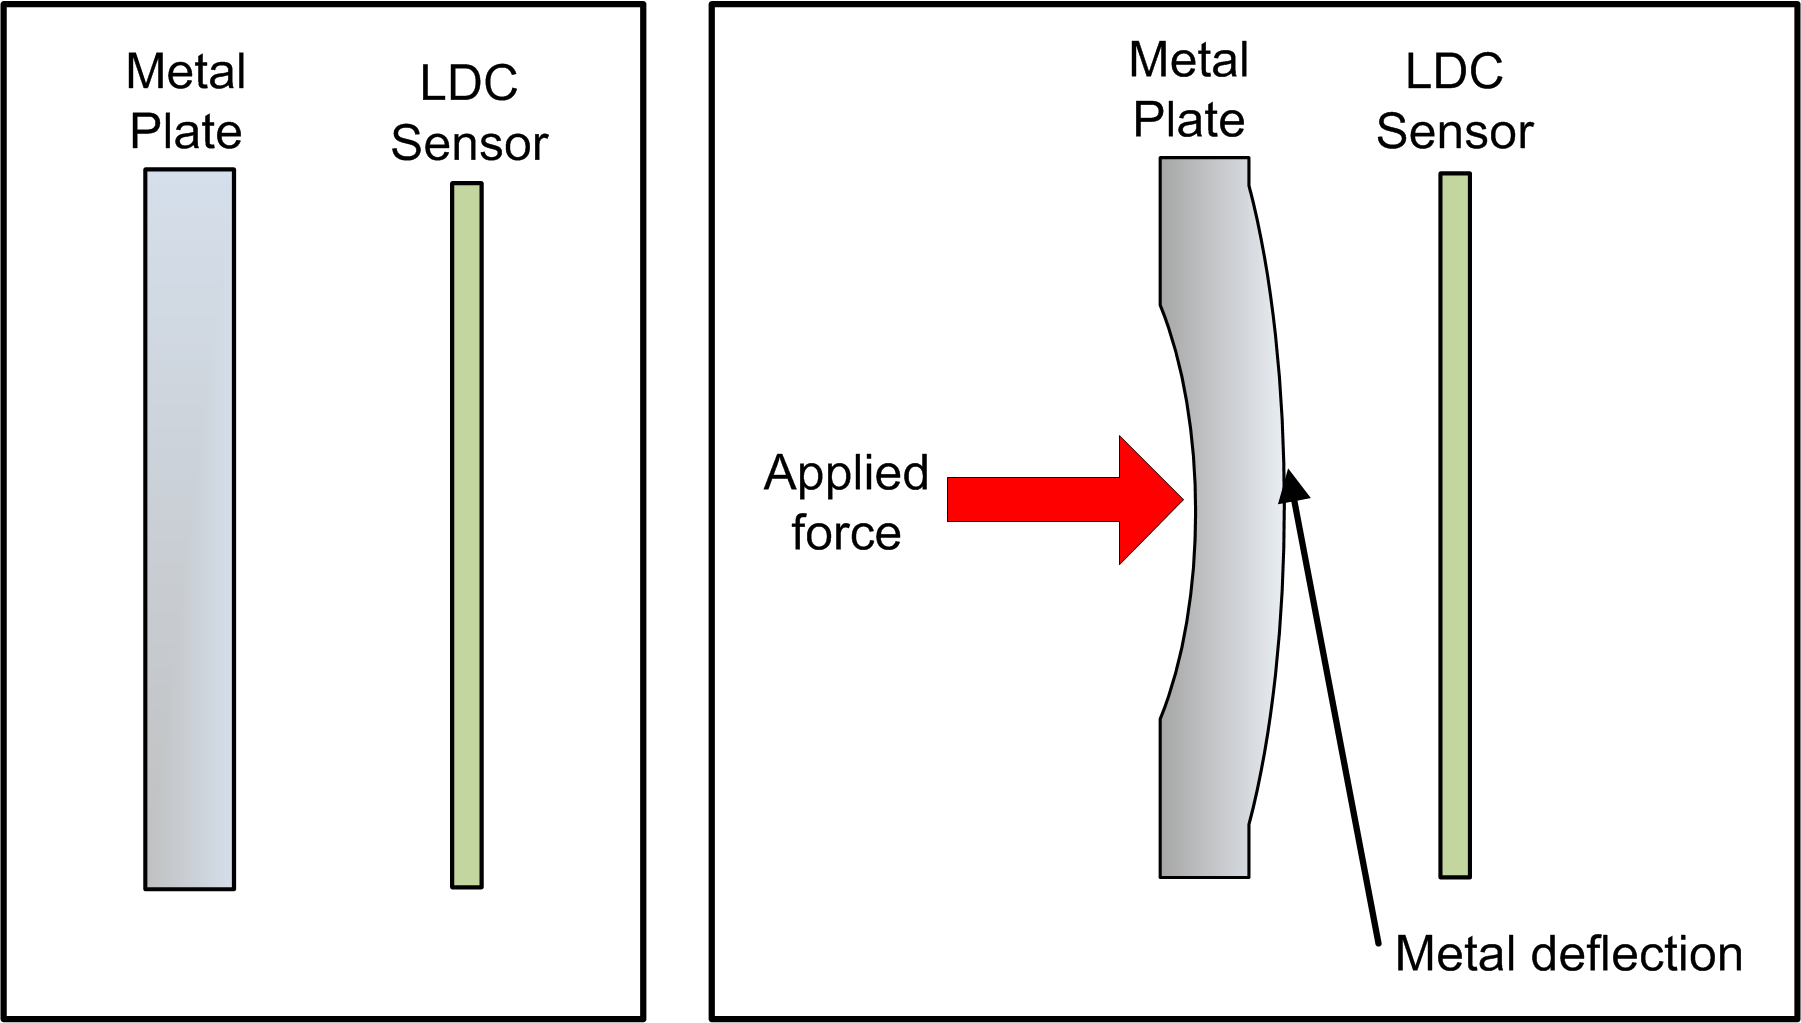 LDC2112 LDC2114 ldc2114-metal-deflection-snosd15.png